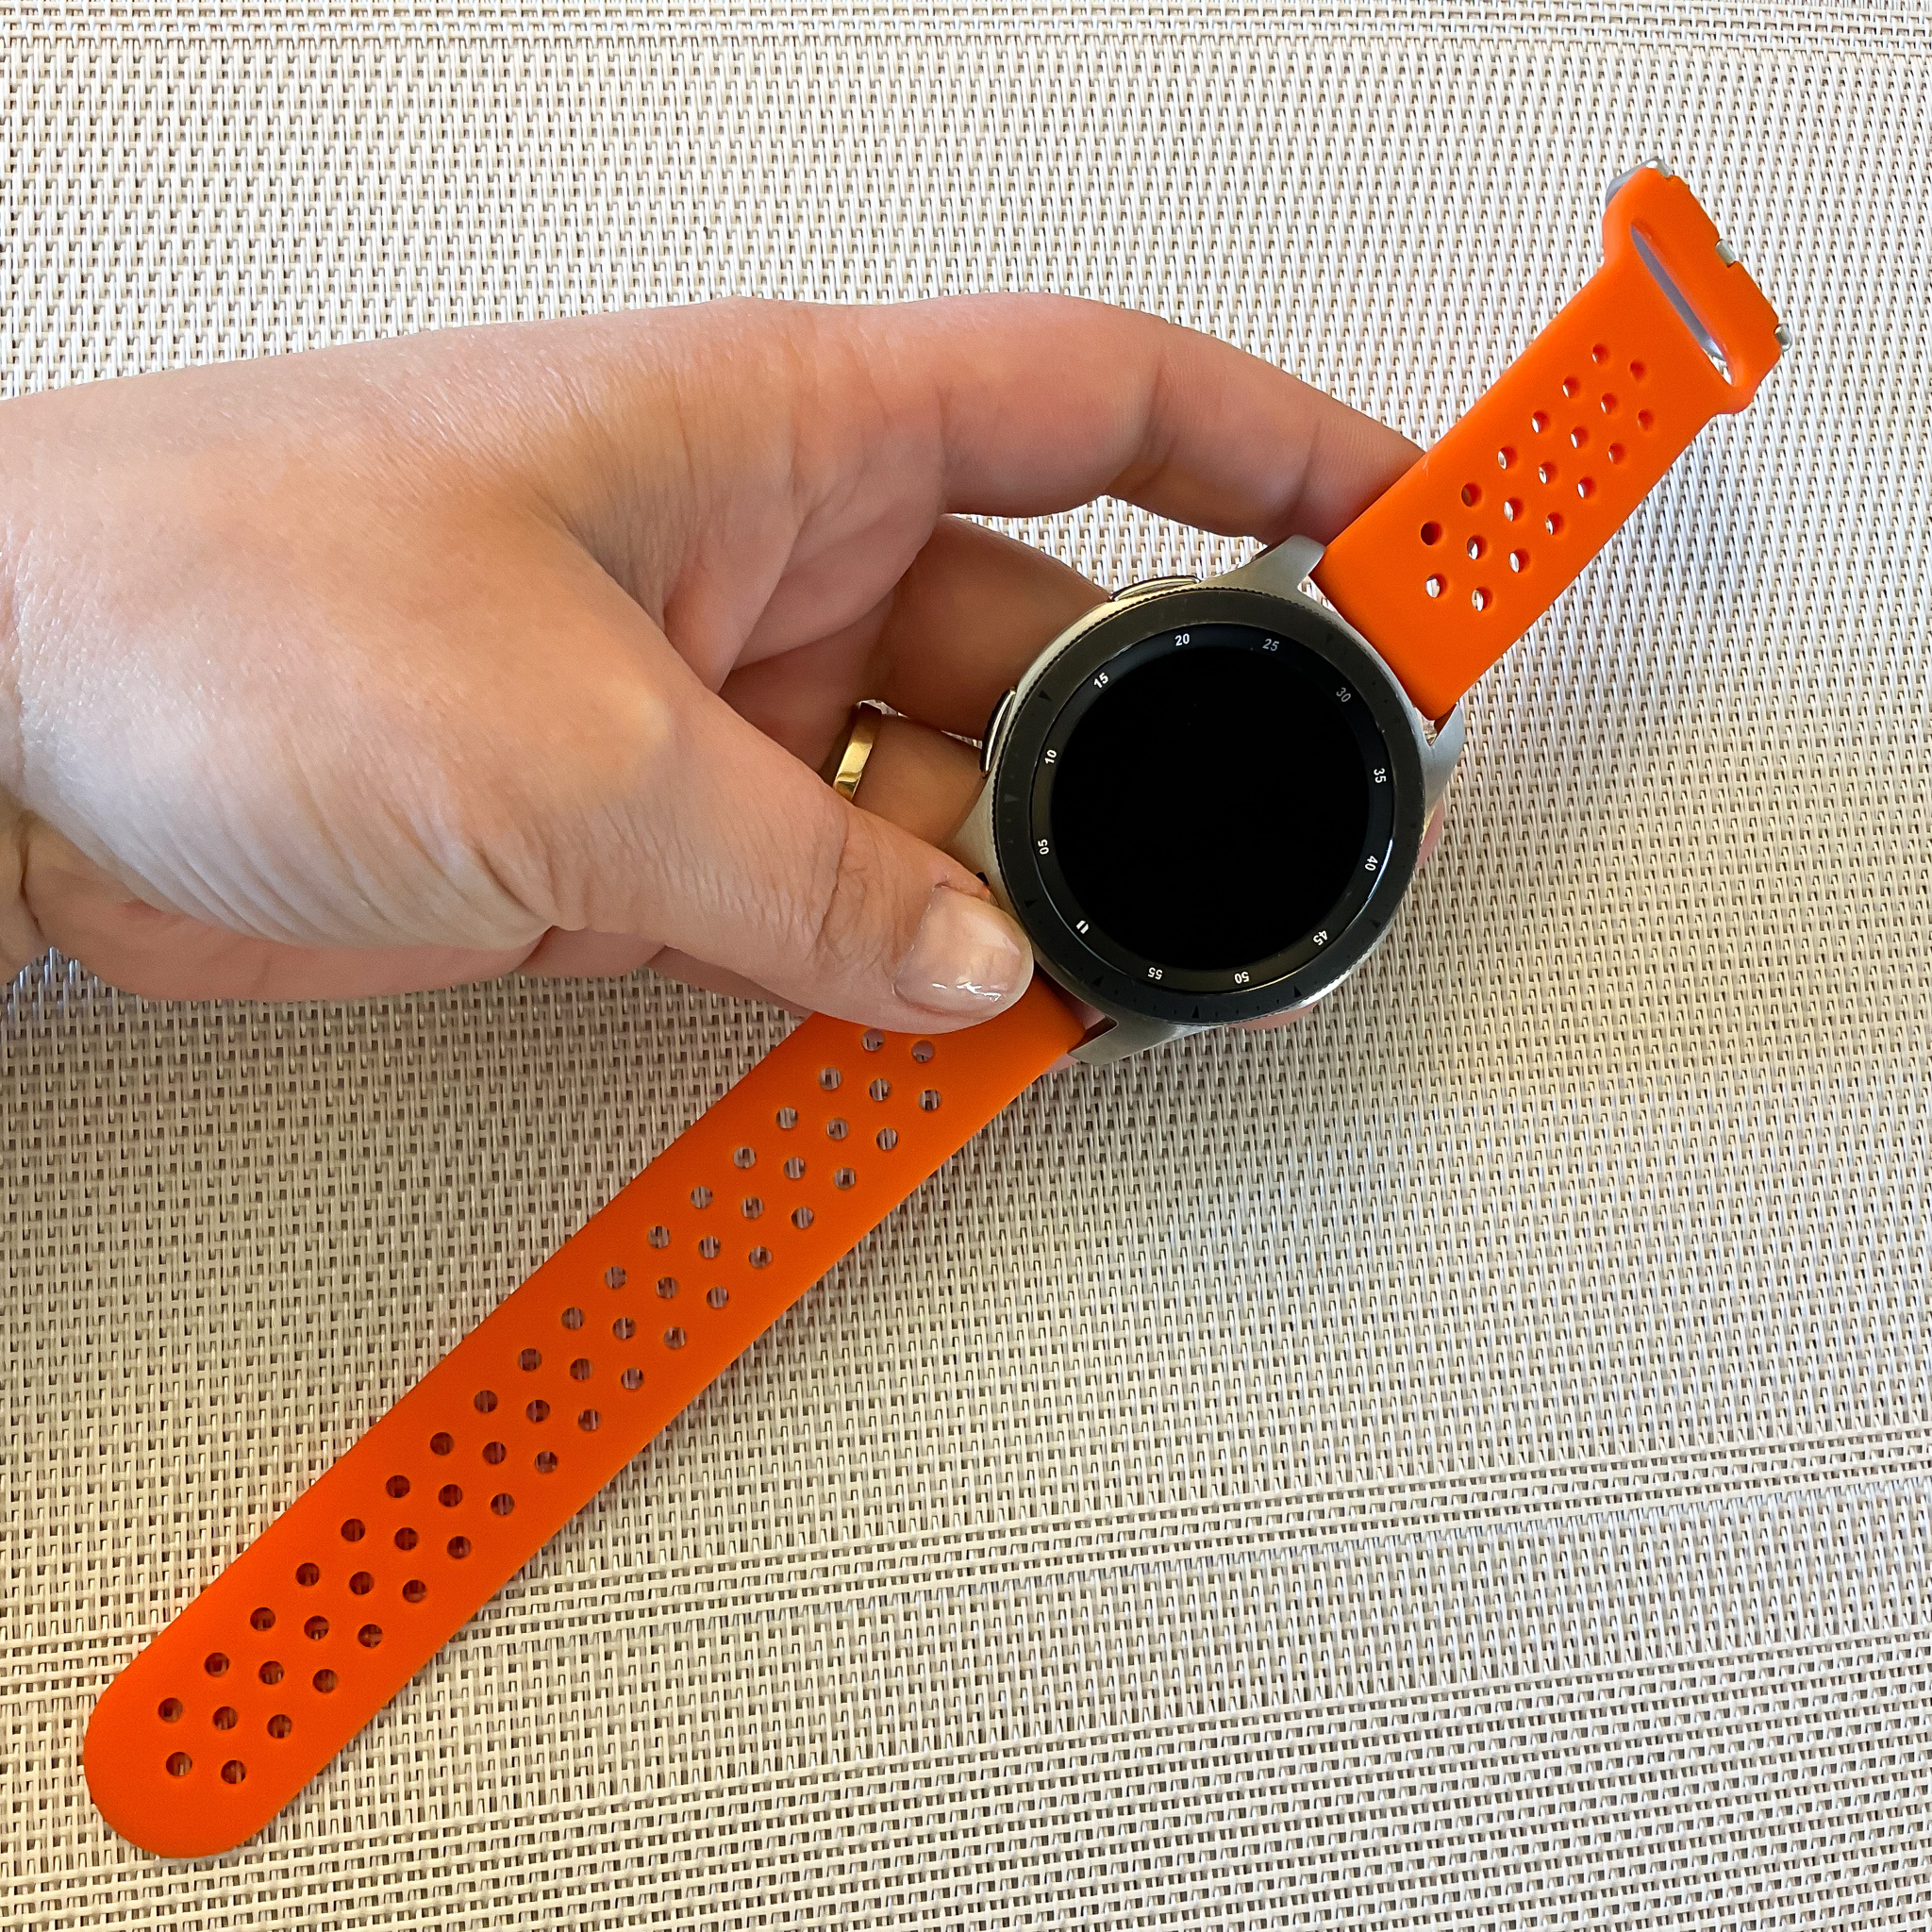 Cinturino doppia fibbia per Samsung Galaxy Watch - arancione